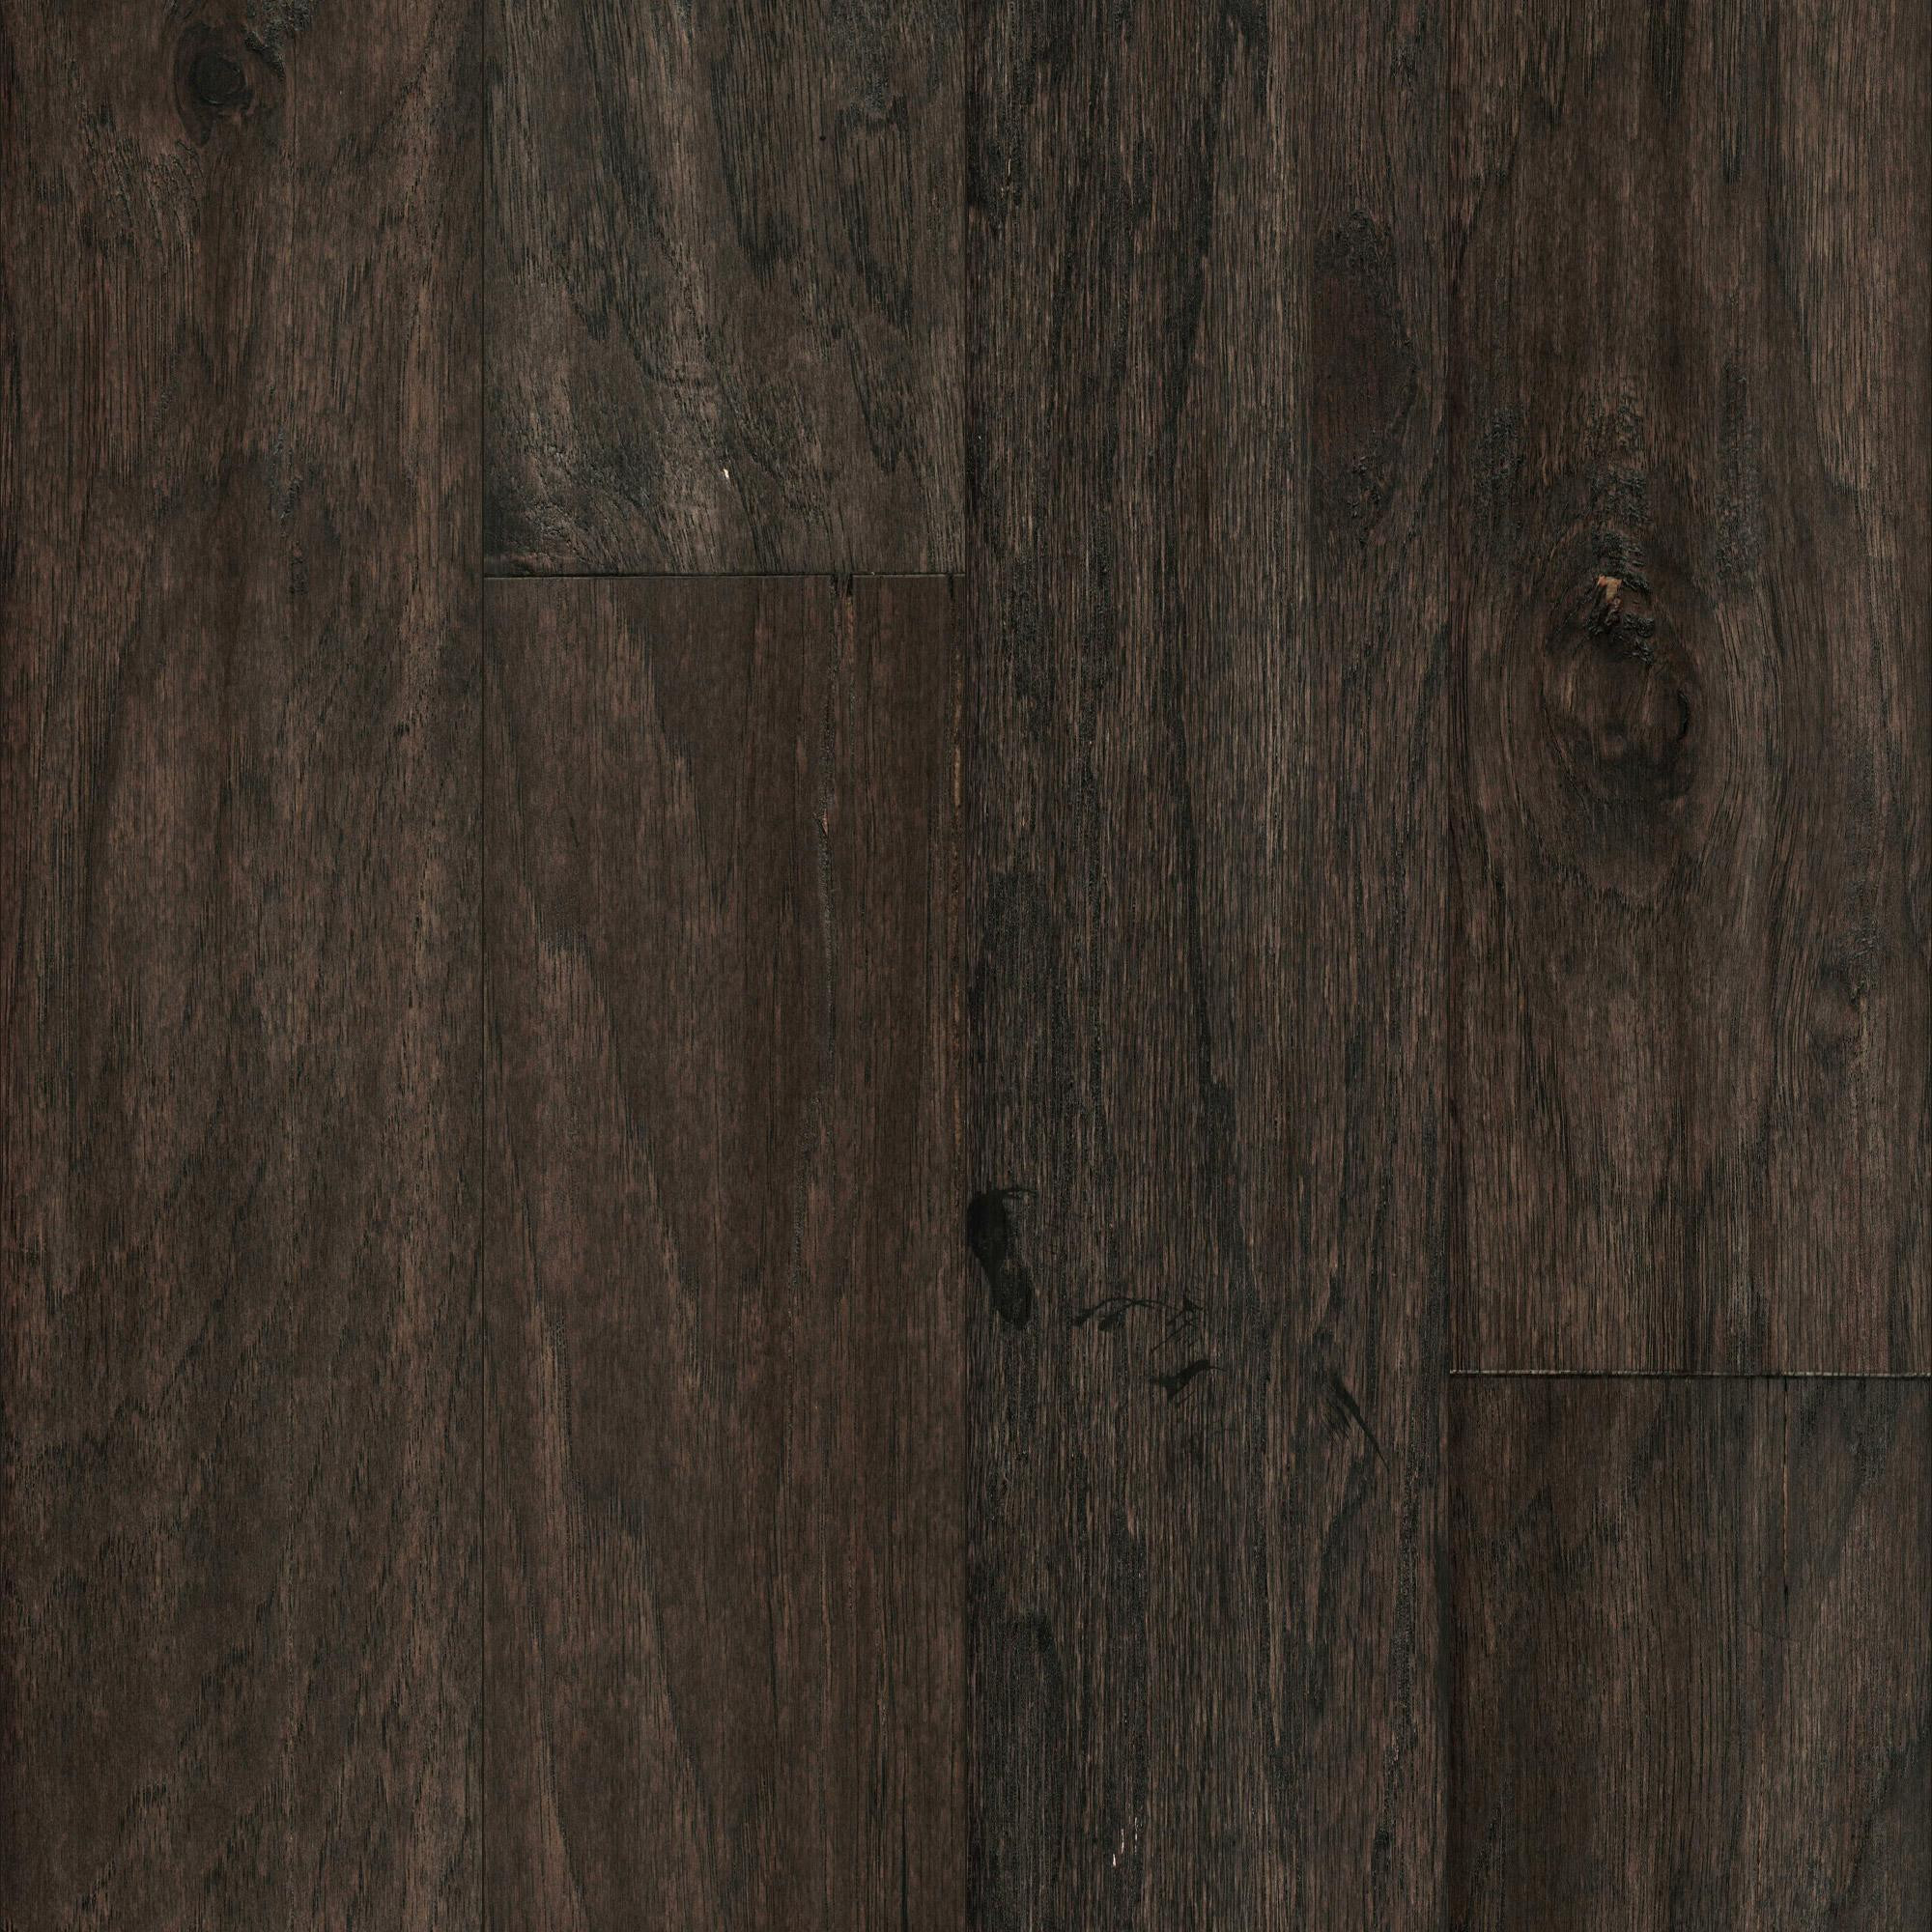 hand scraped hardwood flooring lumber liquidators of mullican lincolnshire sculpted hickory granite 5 engineered with regard to mullican lincolnshire sculpted hickory granite 5 engineered hardwood flooring